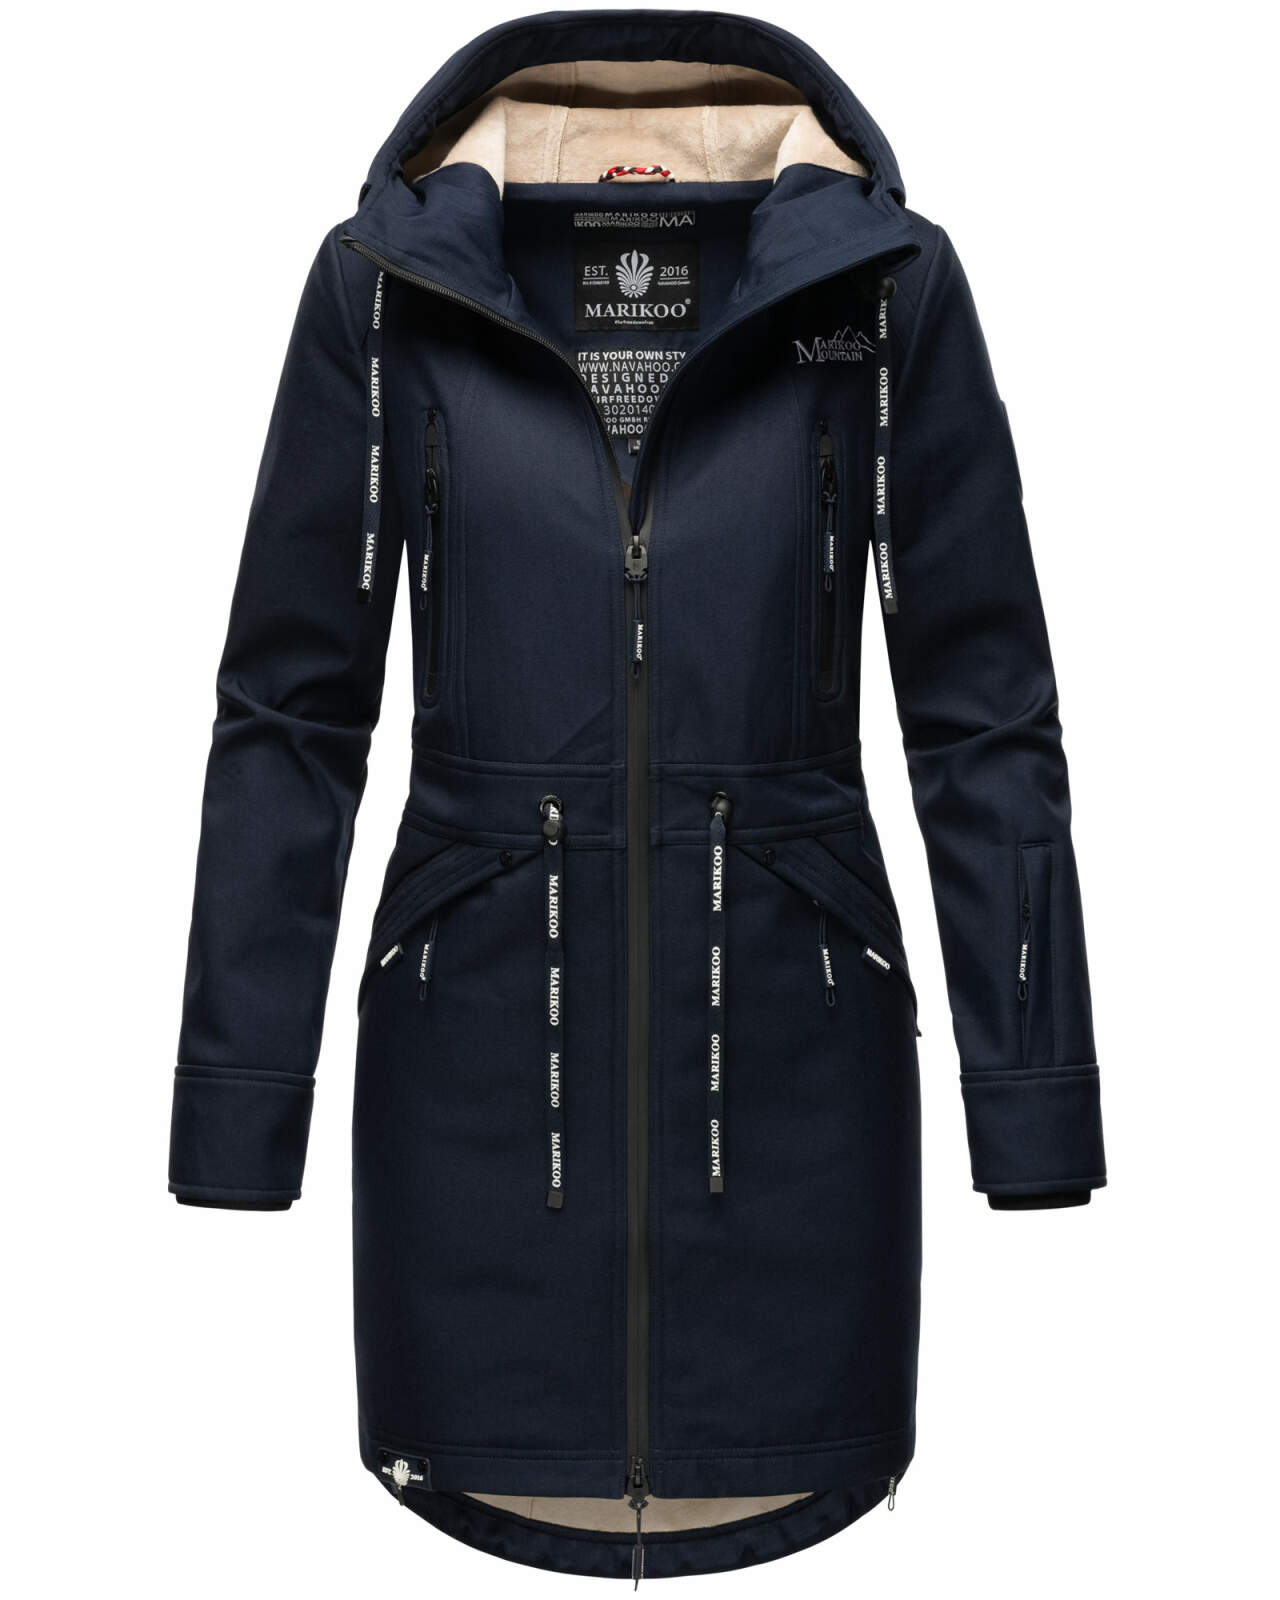 Marikoo Racquellee Damen Softshell Jacke B886 Navy Größe L - Gr. 40 -,  99,90 €